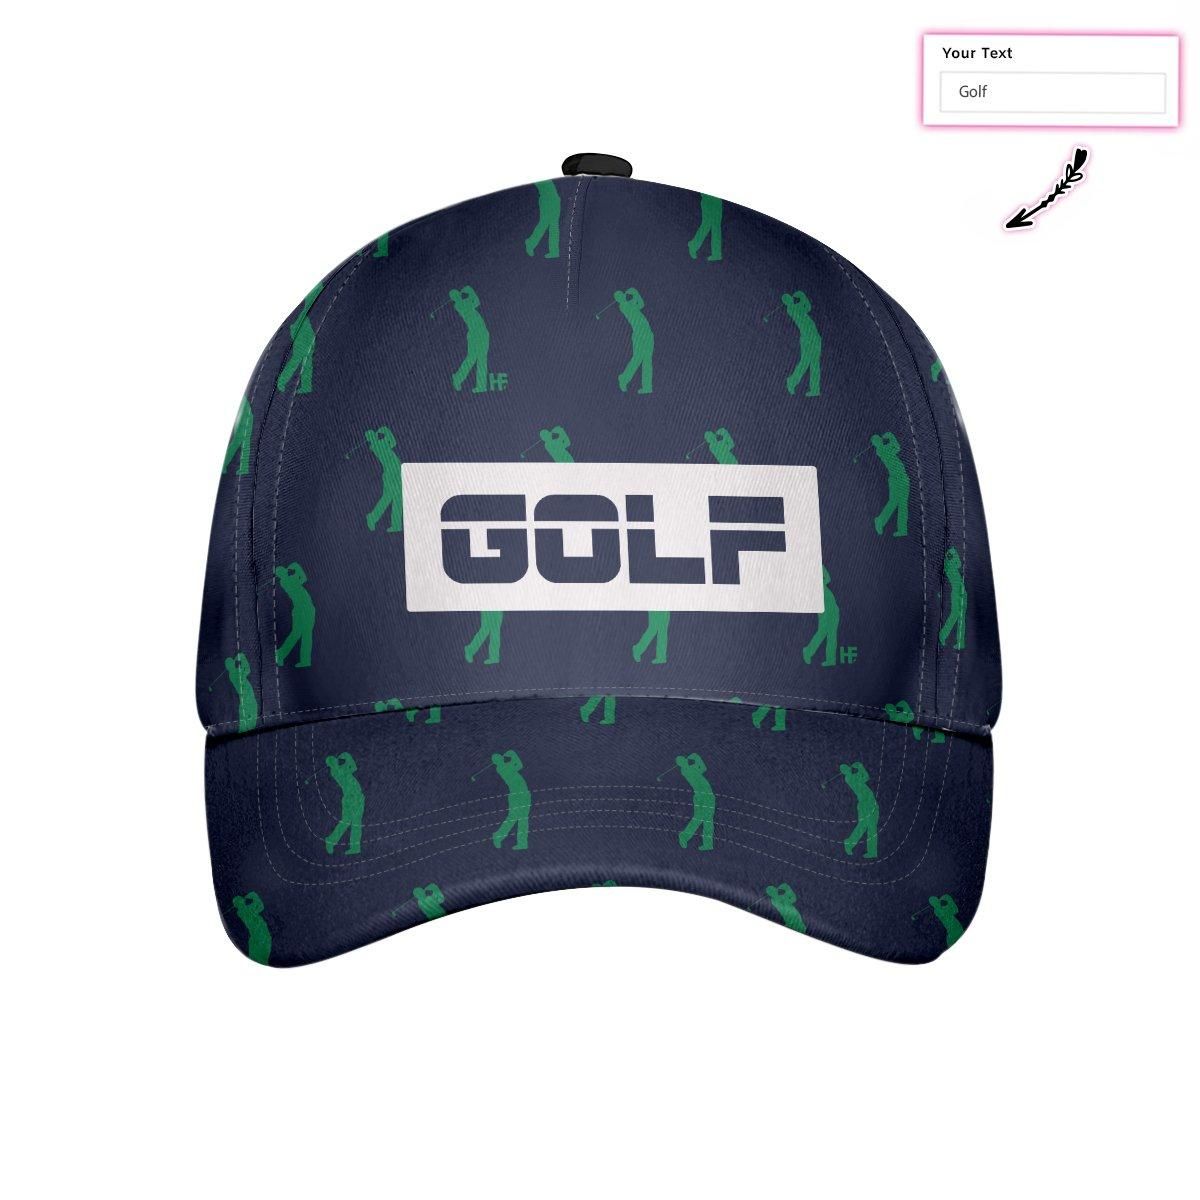 Custom Hot Golf Pattern Cap